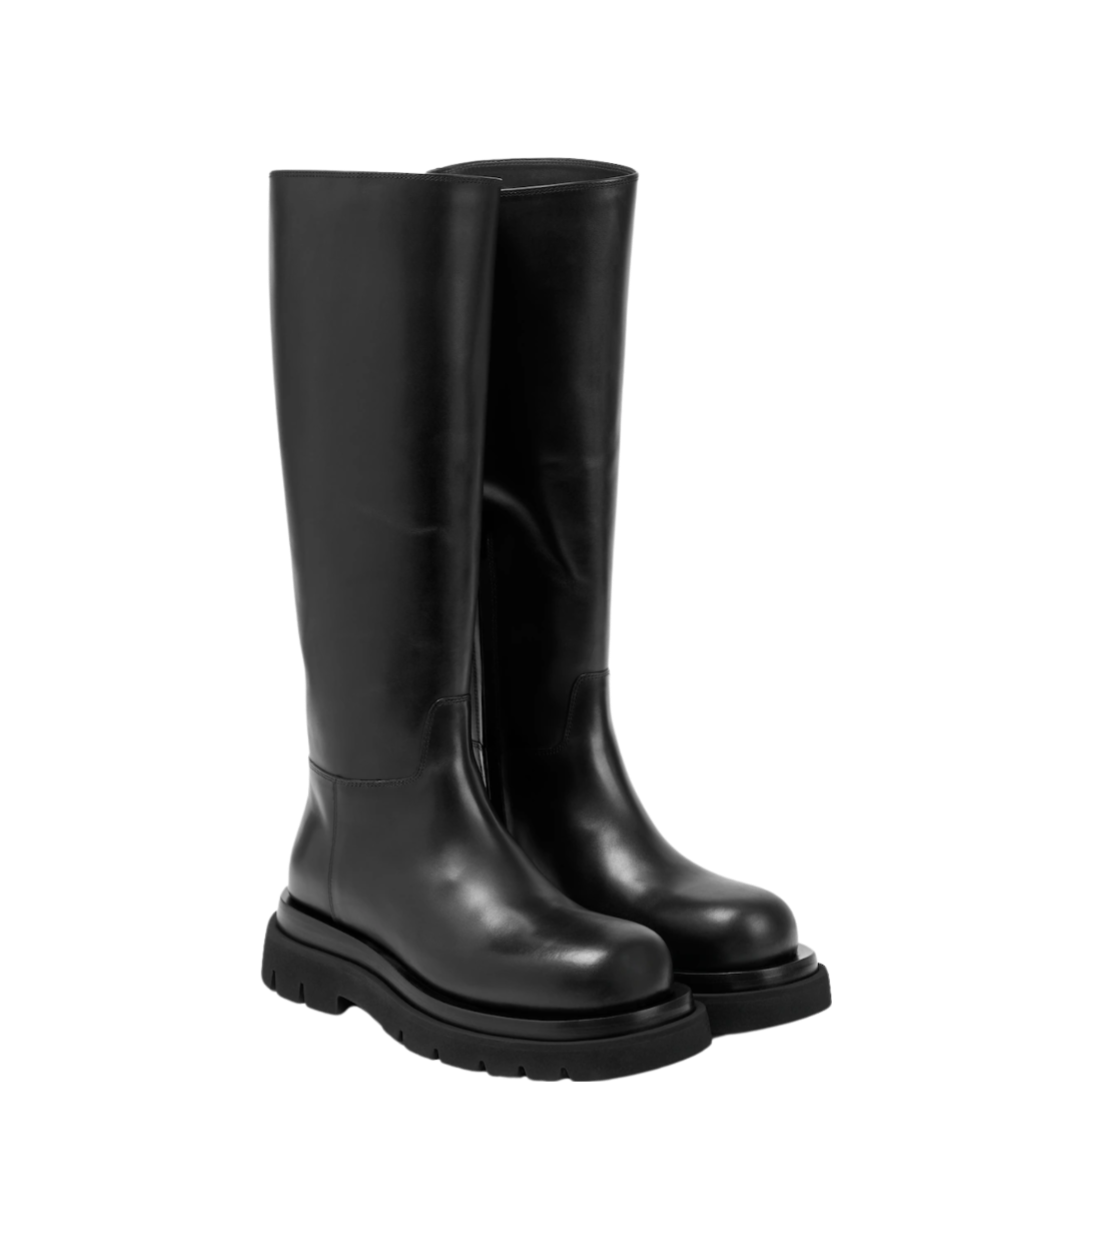 Lug leather knee-high boots